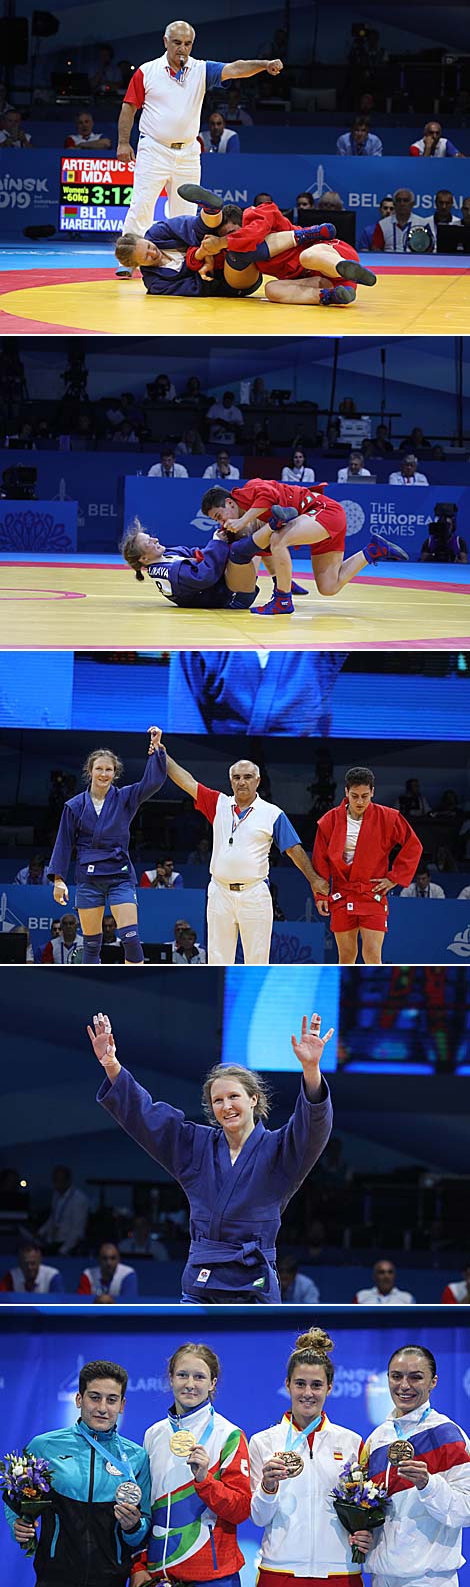 Belarus' wrestler Vera Harelikava clinches gold at 2nd European Games